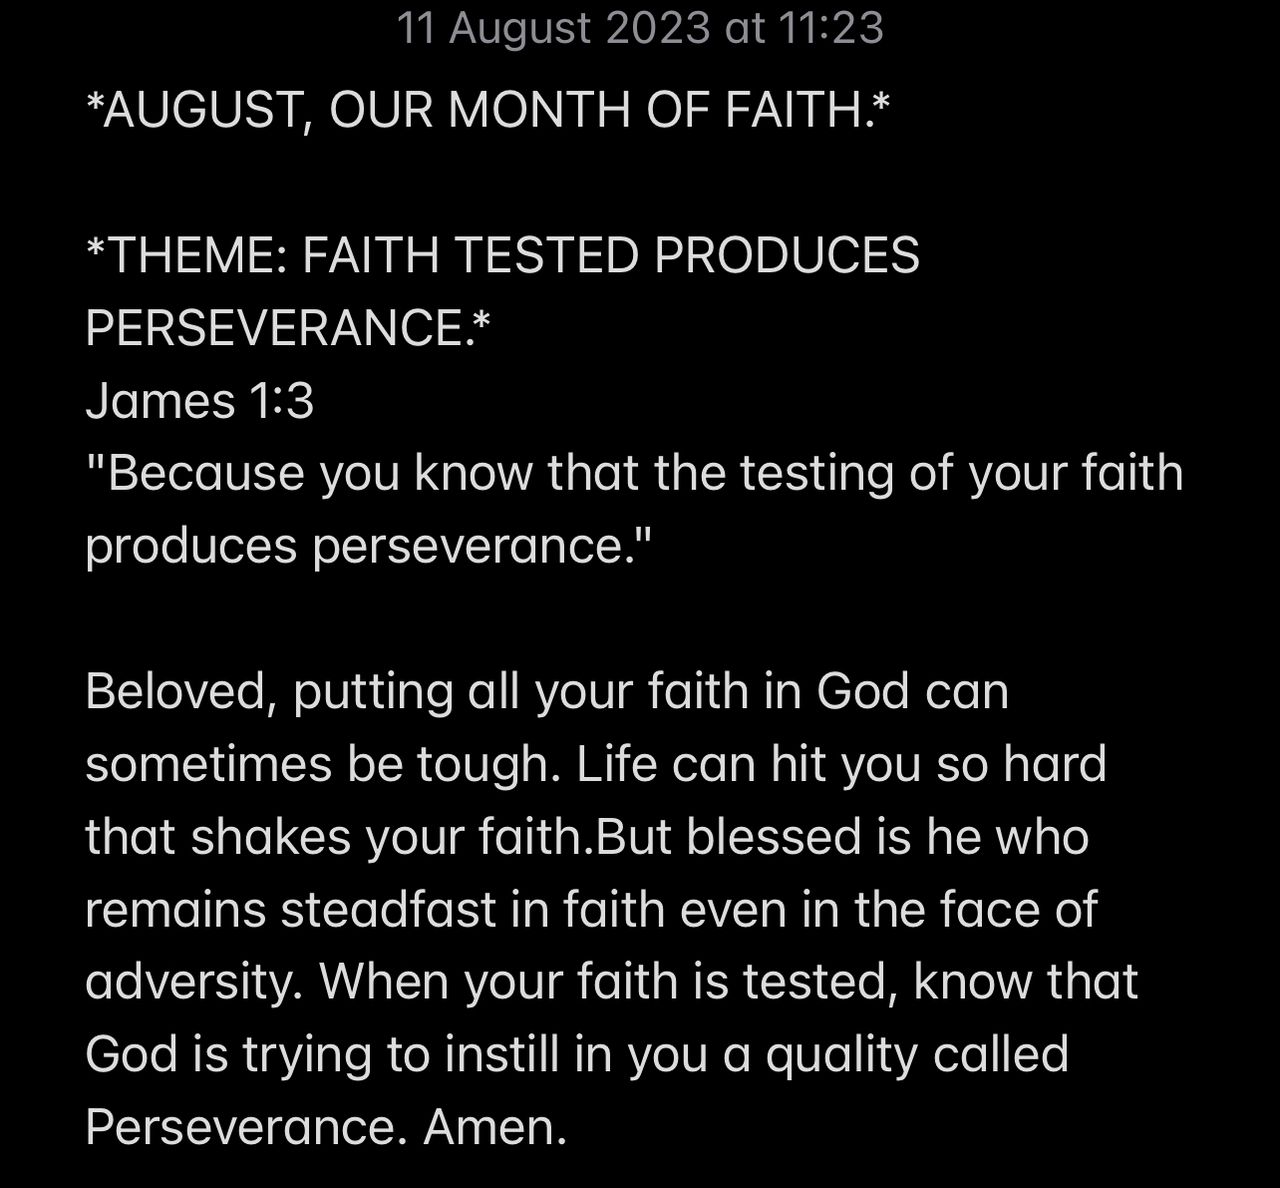 FAITH TESTED PRODUCES PERSEVERANCE.